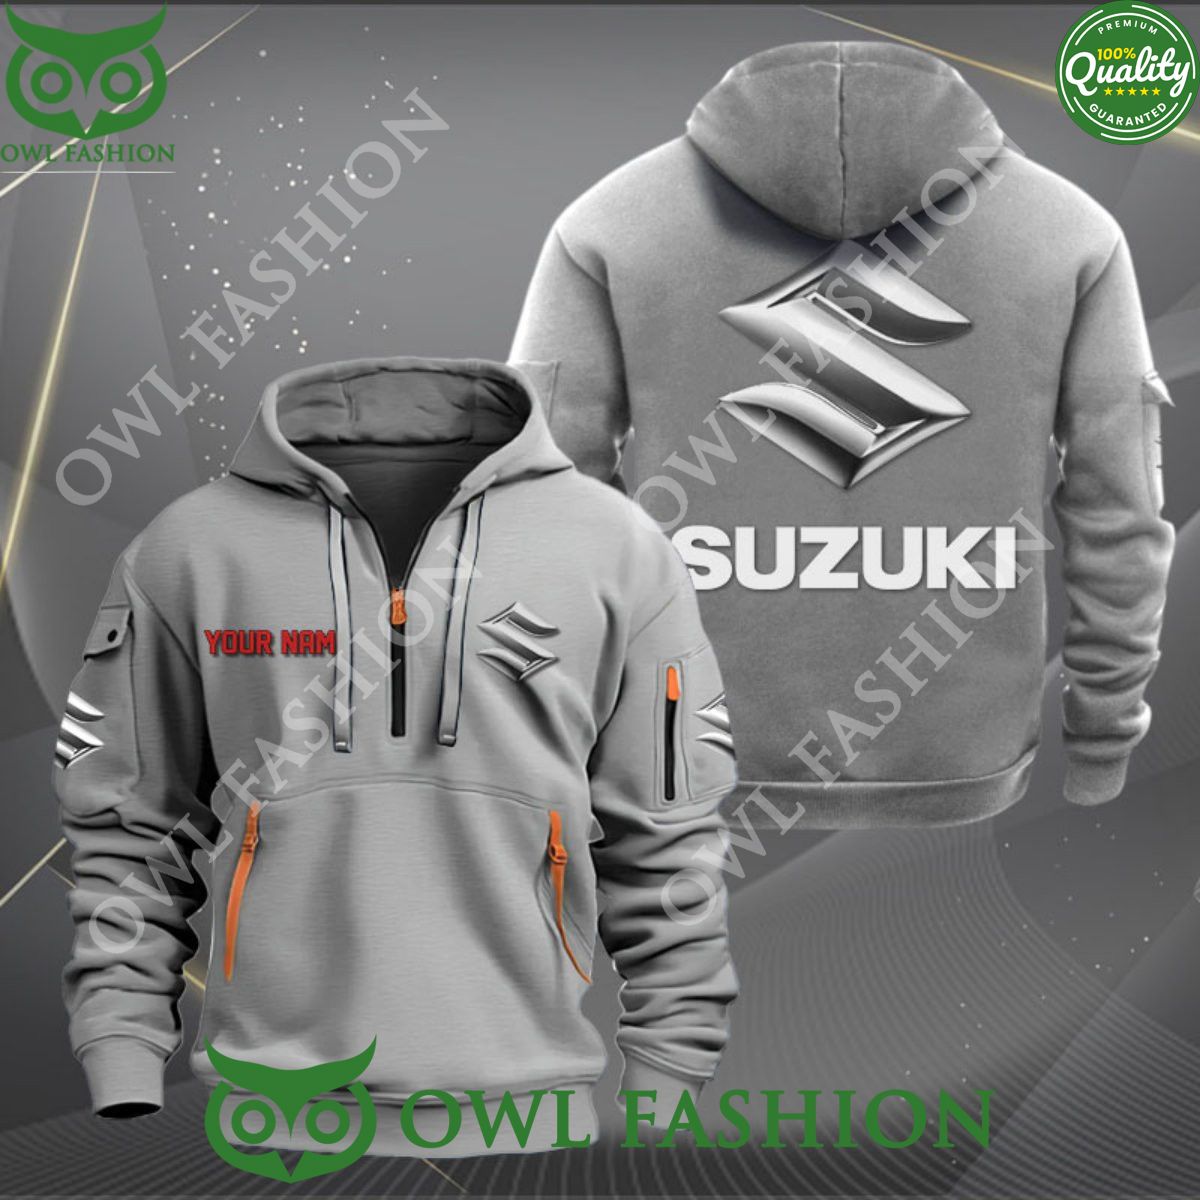 Suzuki Automobile Brand Personalized 2d half zipper Hoodie You look lazy